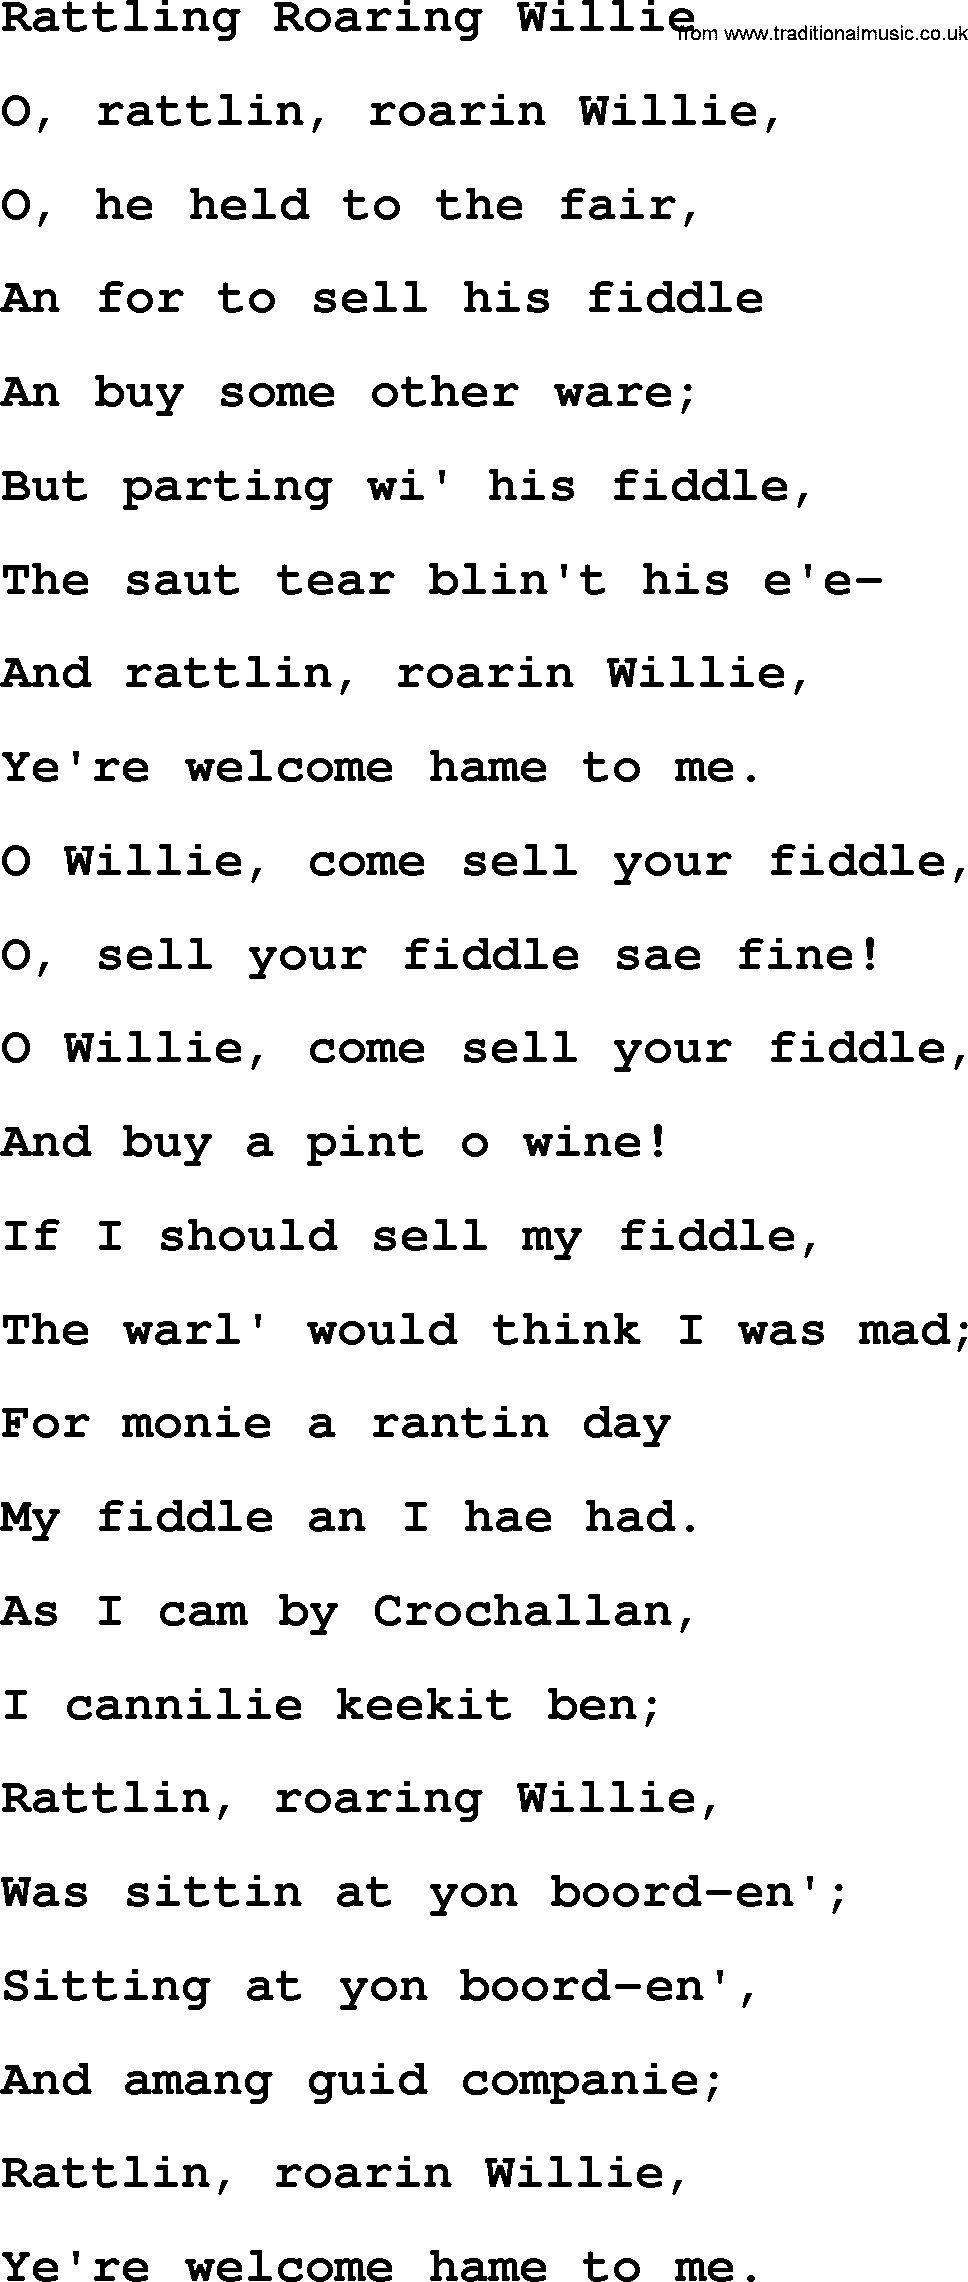 The Dubliners song: Rattling Roaring Willie, lyrics